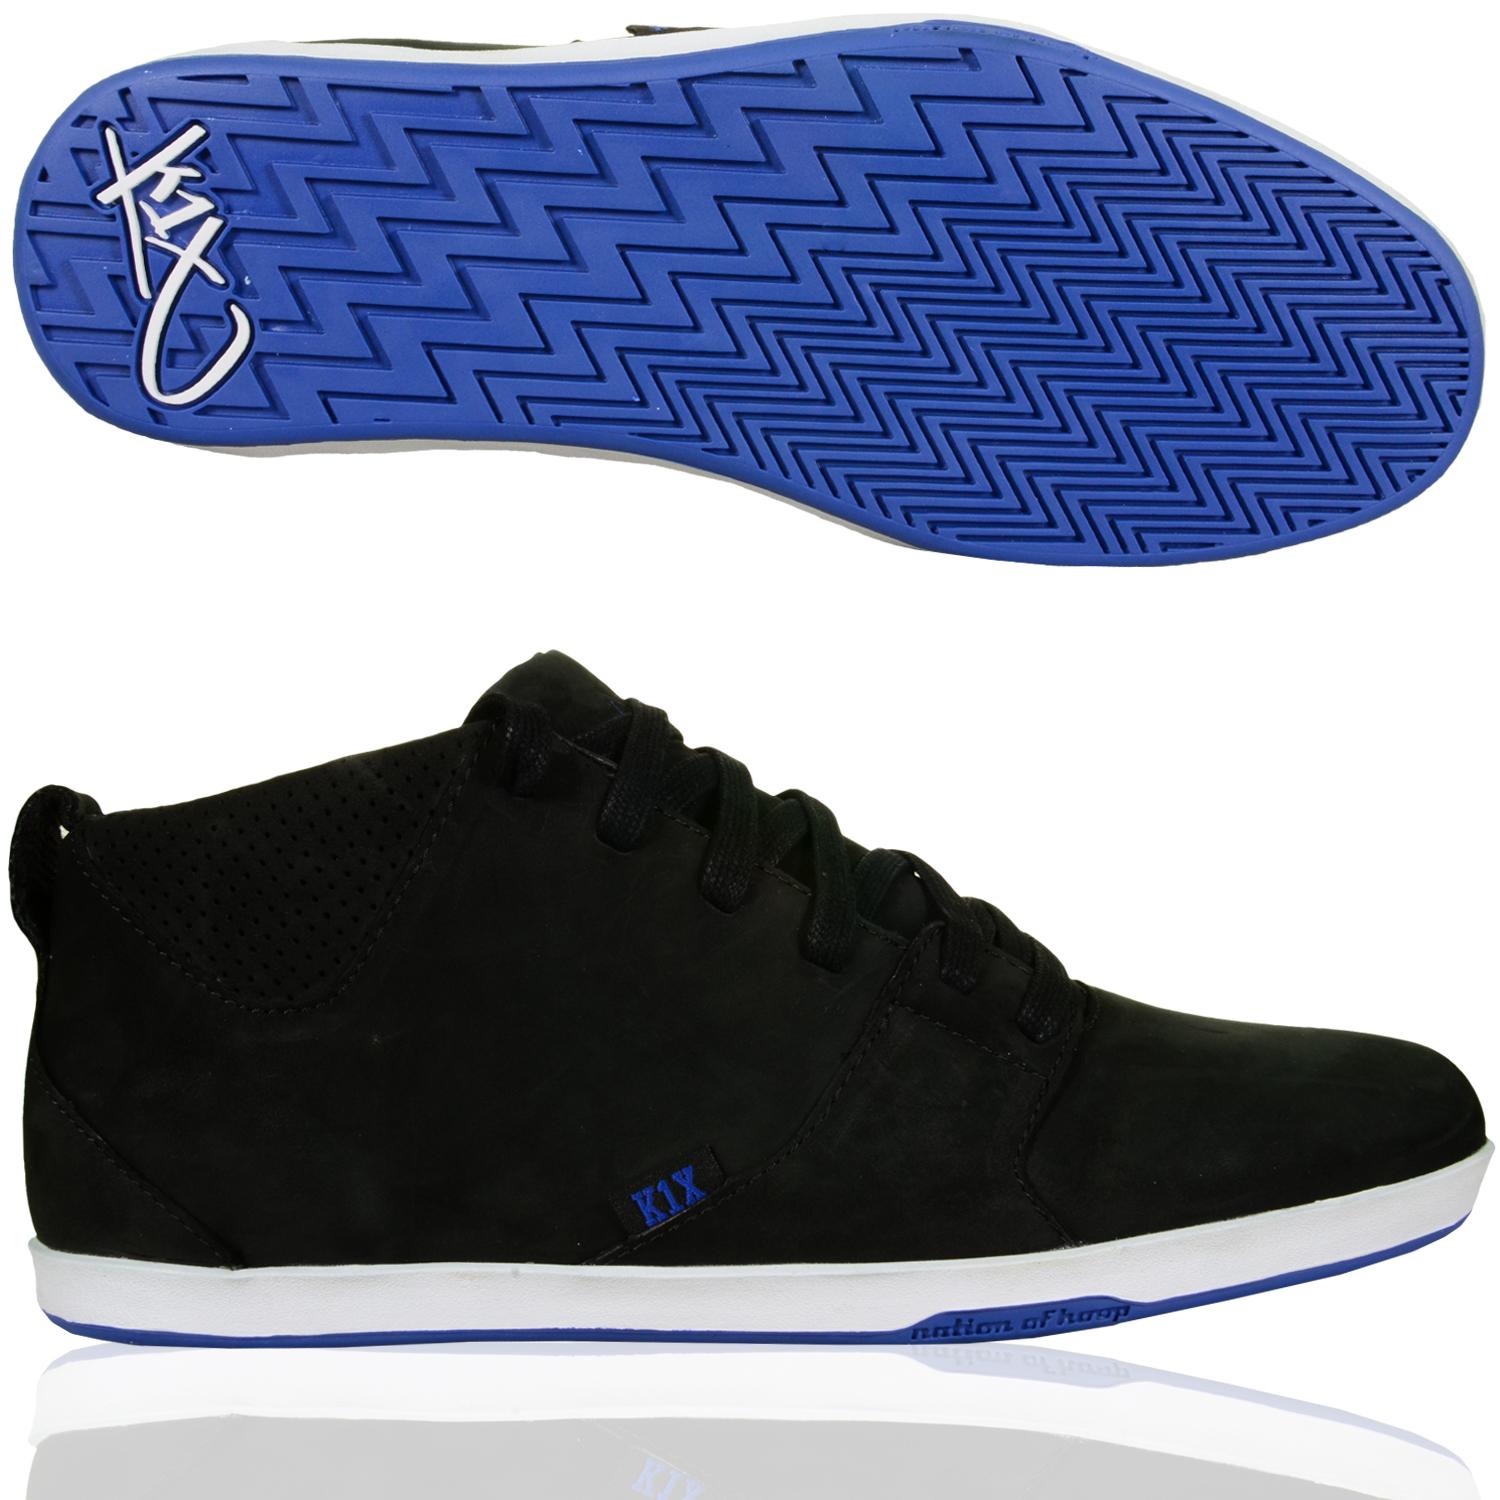 Foto K1x Shoe Lp Sport Le La Zapatilla De Deporte De Alta Negro Azul